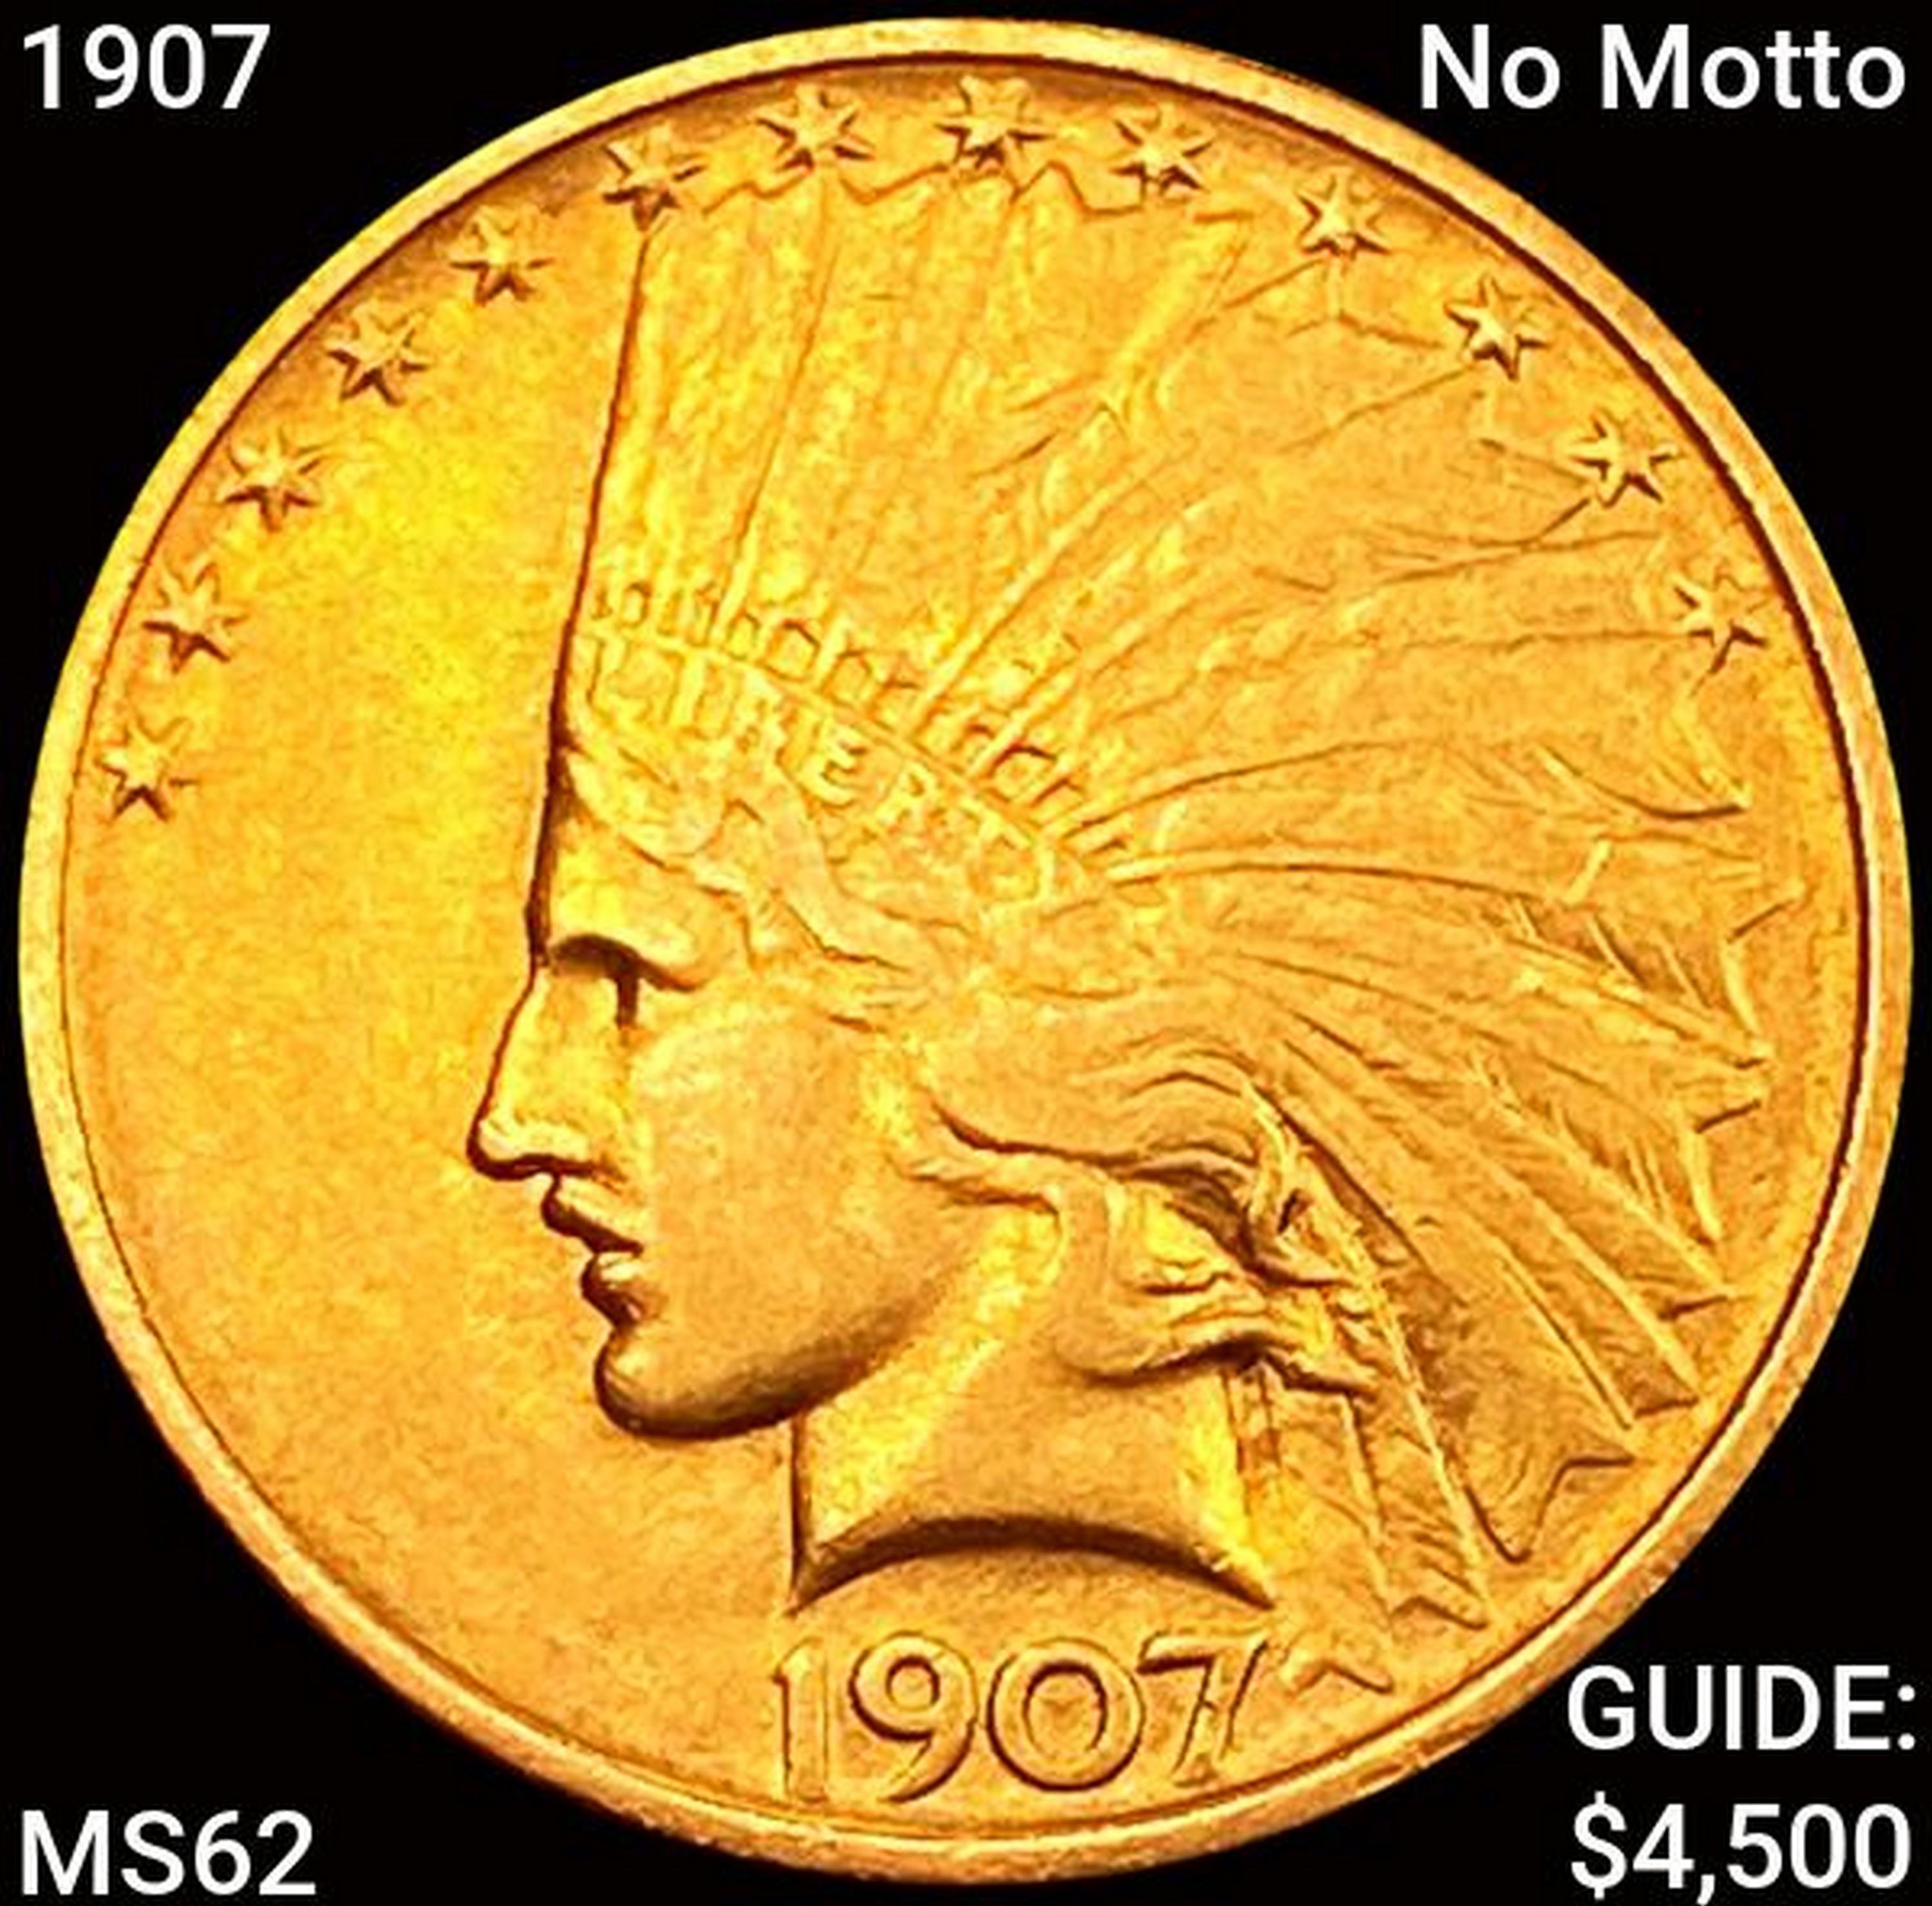 1907 No Motto $10 Gold Eagle UNCIRCULATED